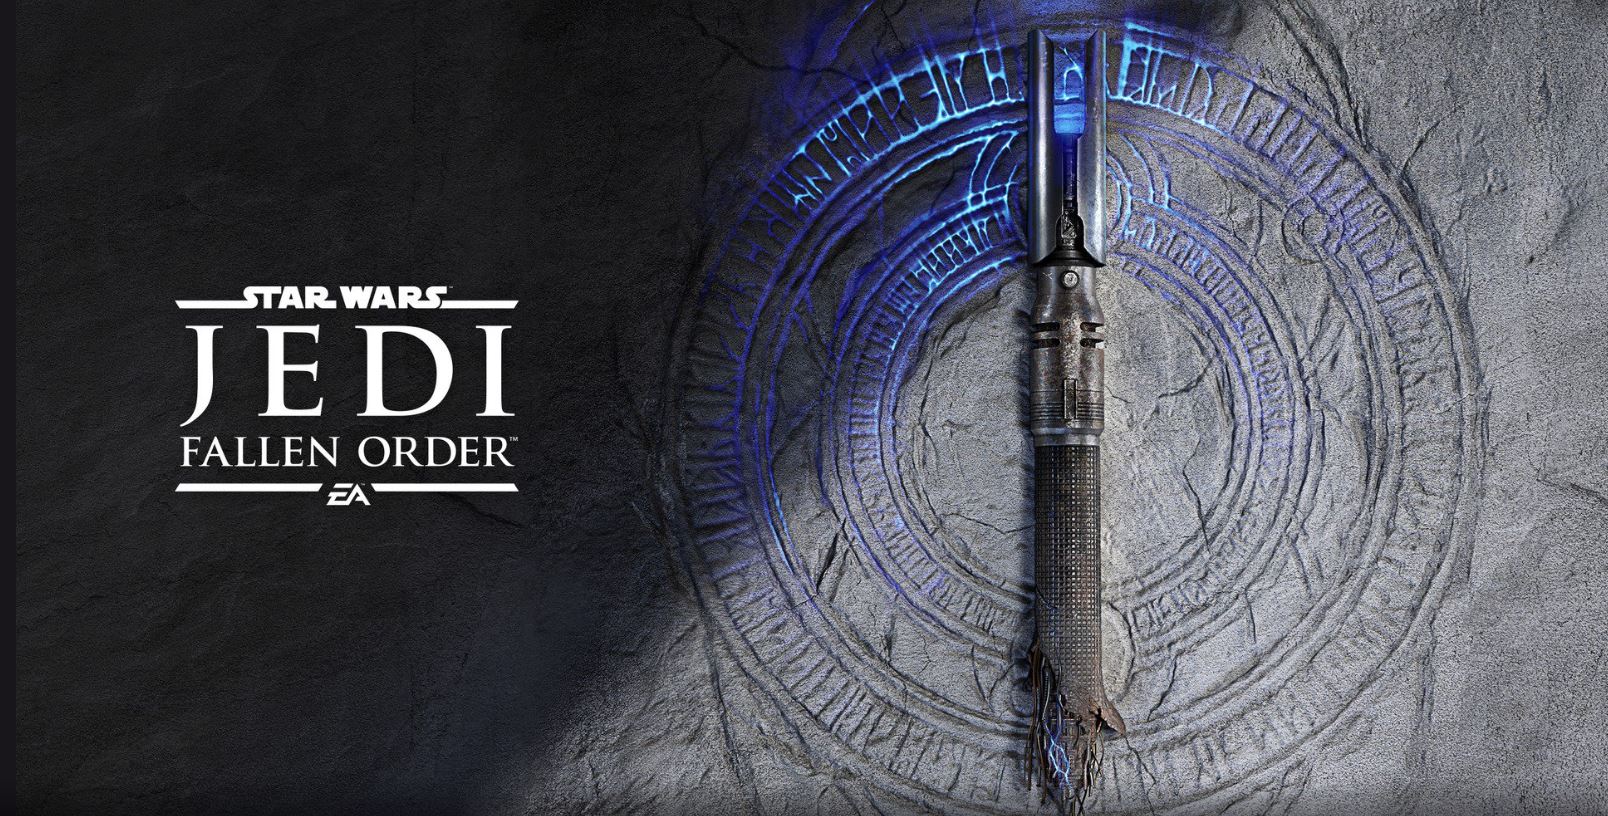 Star Wars Jedi: Fallen Order Premiere Set for April 13